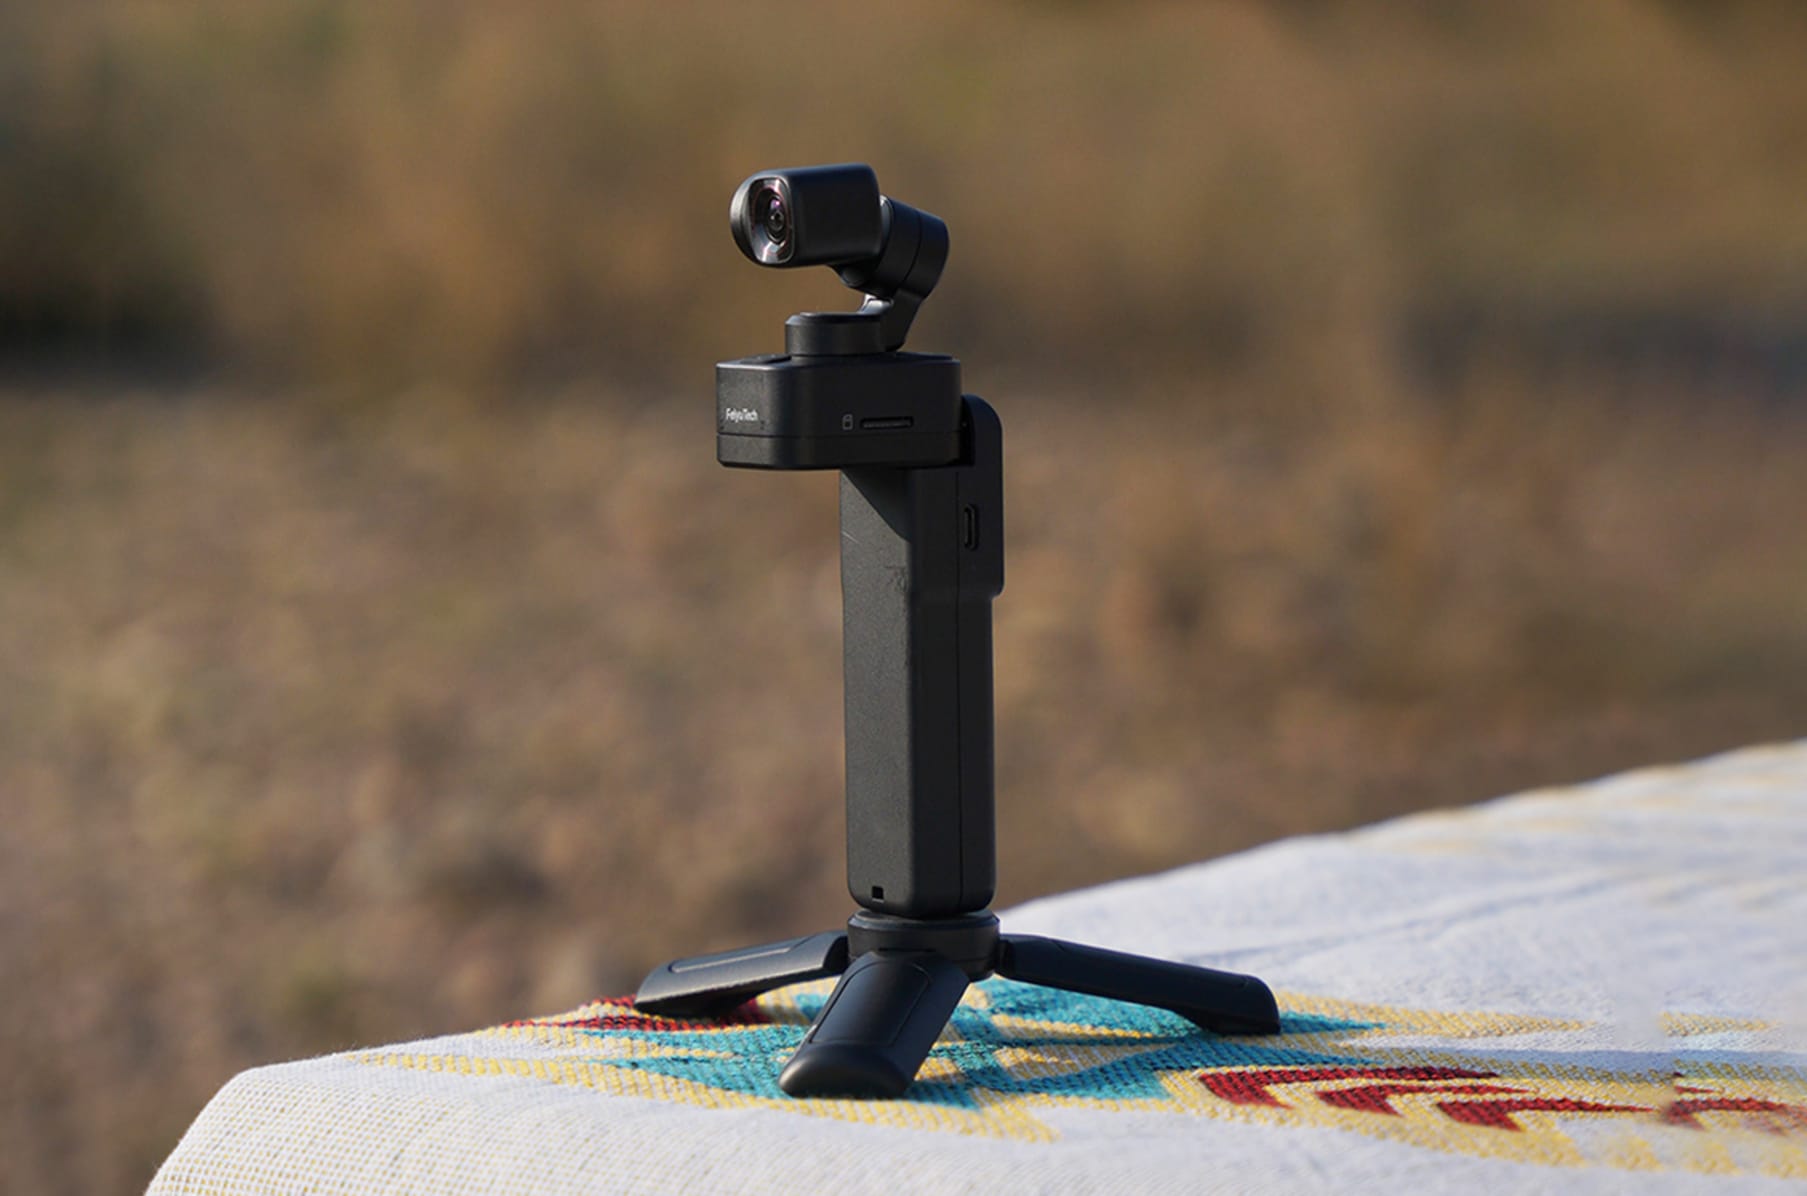 Feiyu Pocket 3: Cordless Detachable 3-Axis Gimbal Camera by FeiyuTech —  Kickstarter